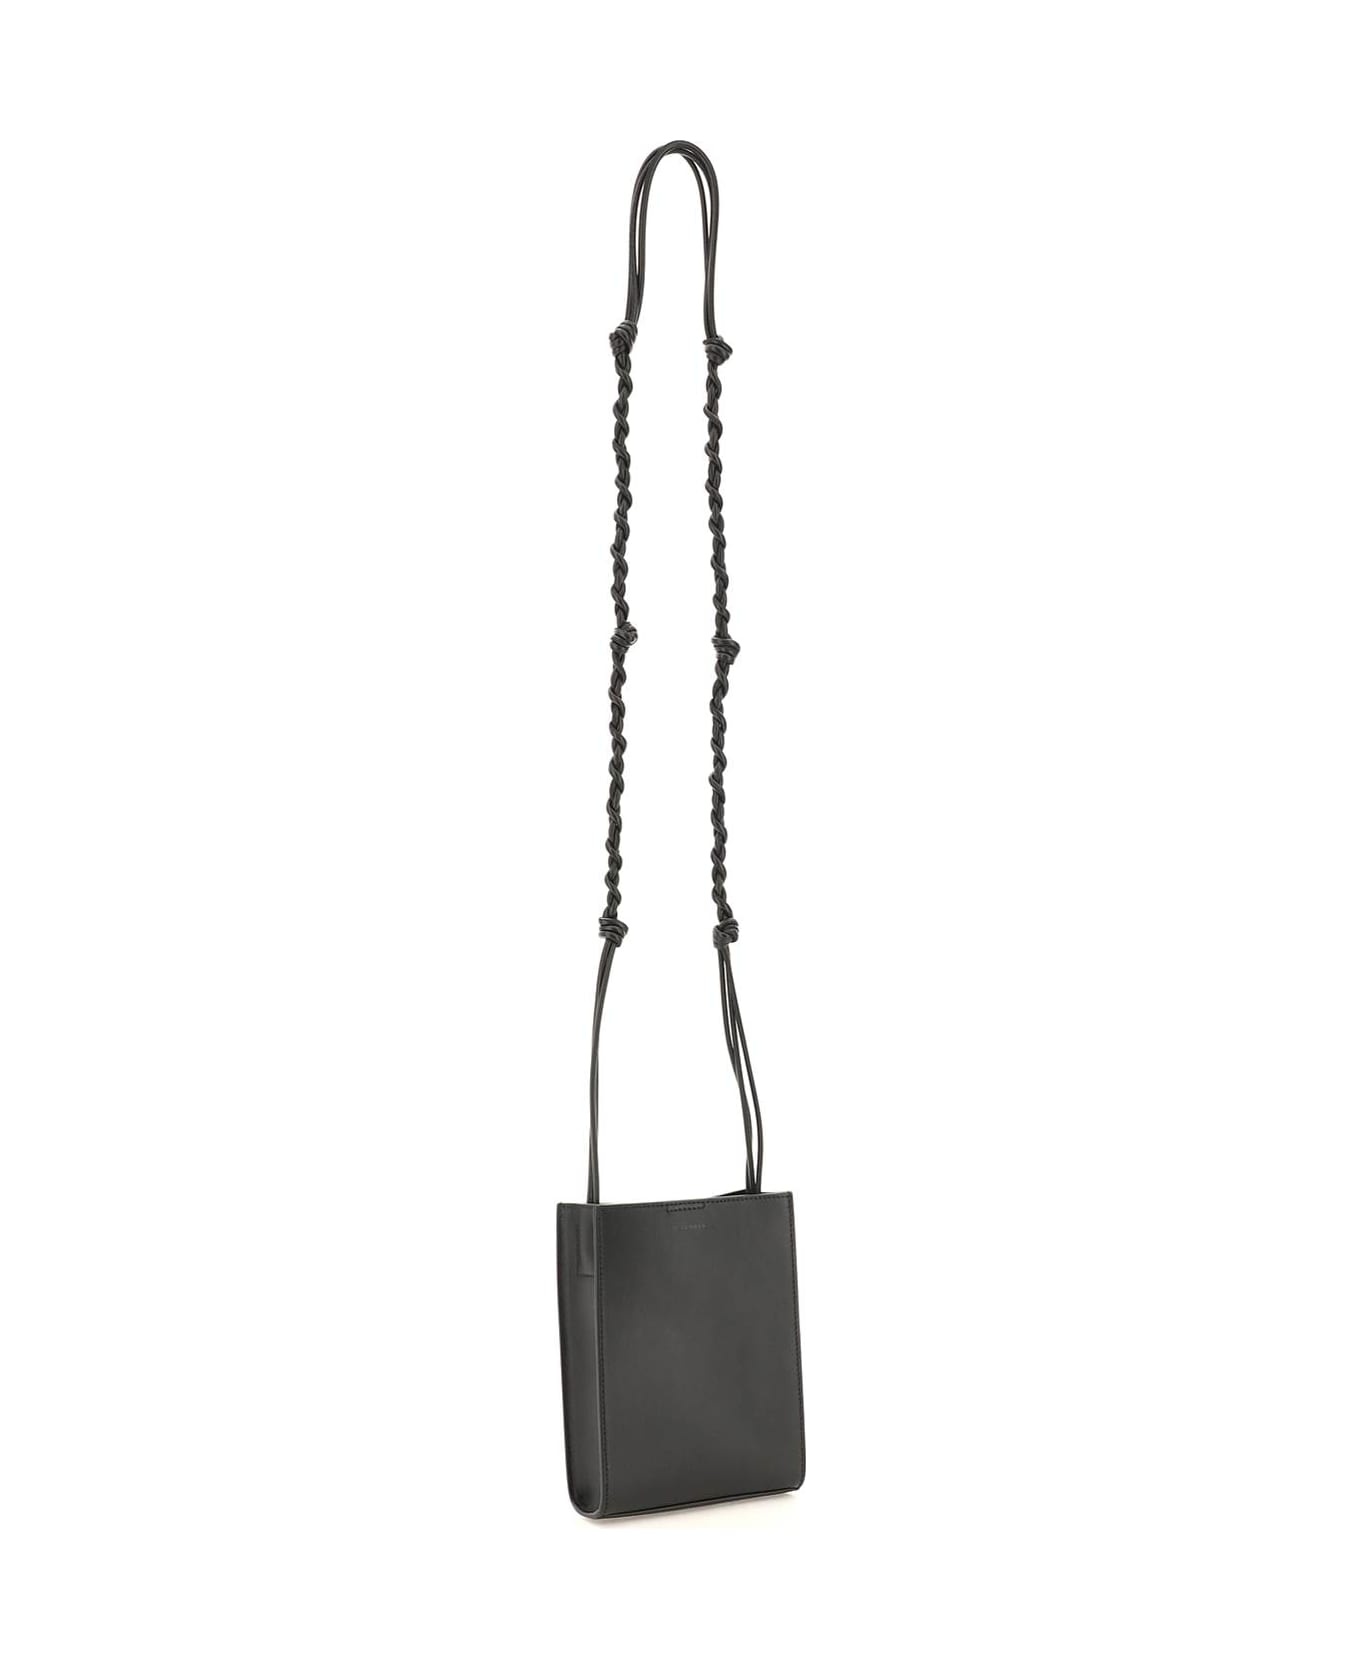 Tangle Crossbody Bag In Black Leather - 3